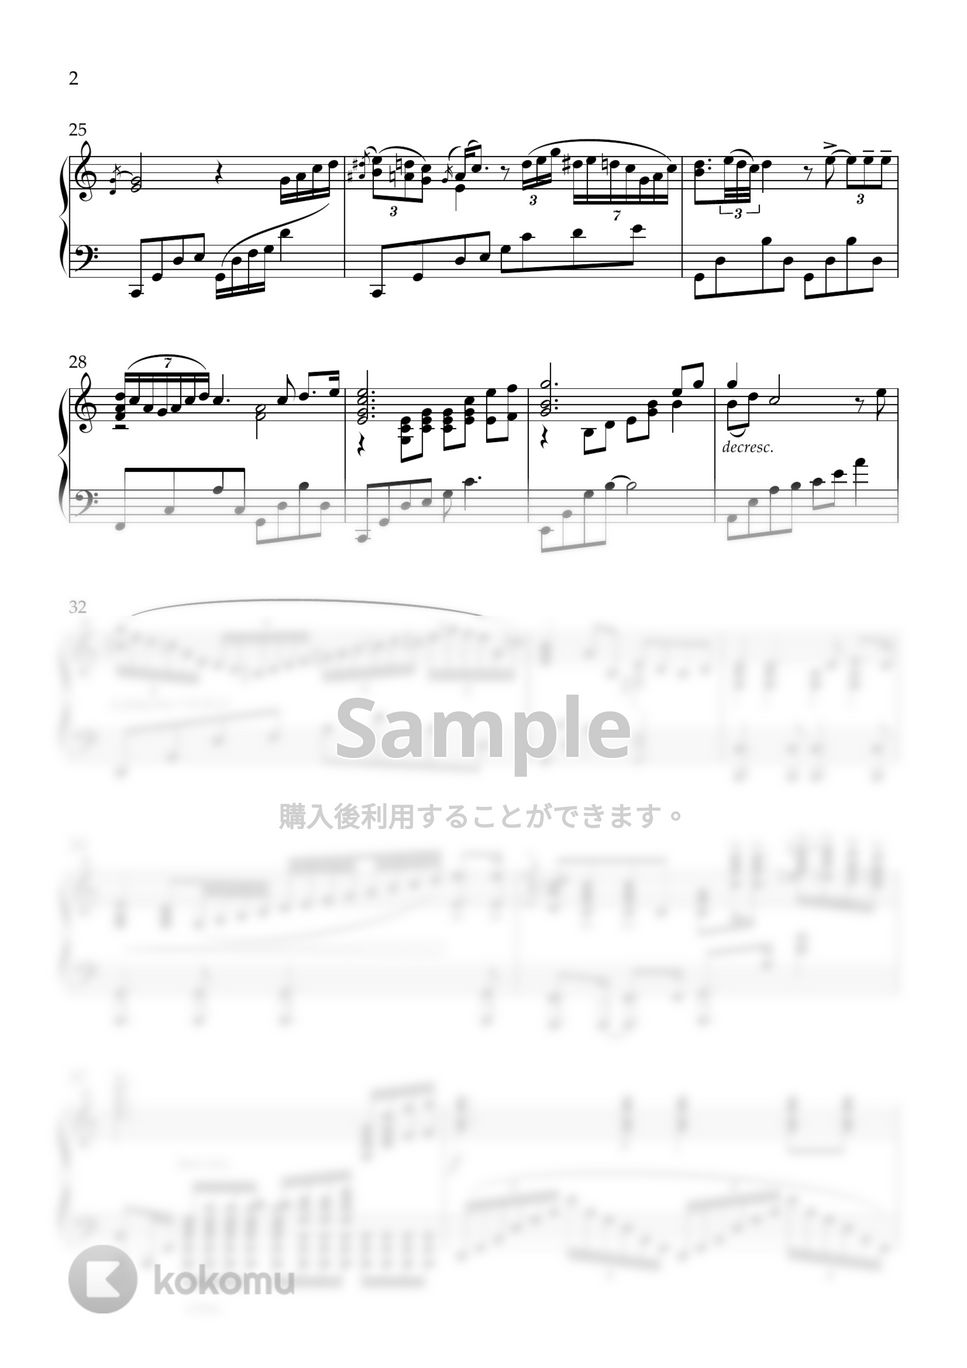 Katsu Hoshi - 愛は花, 君はその種子-おもひでぽろぽろ OST (原曲: 'The Rose' by Bette Midler) by Pian'orche